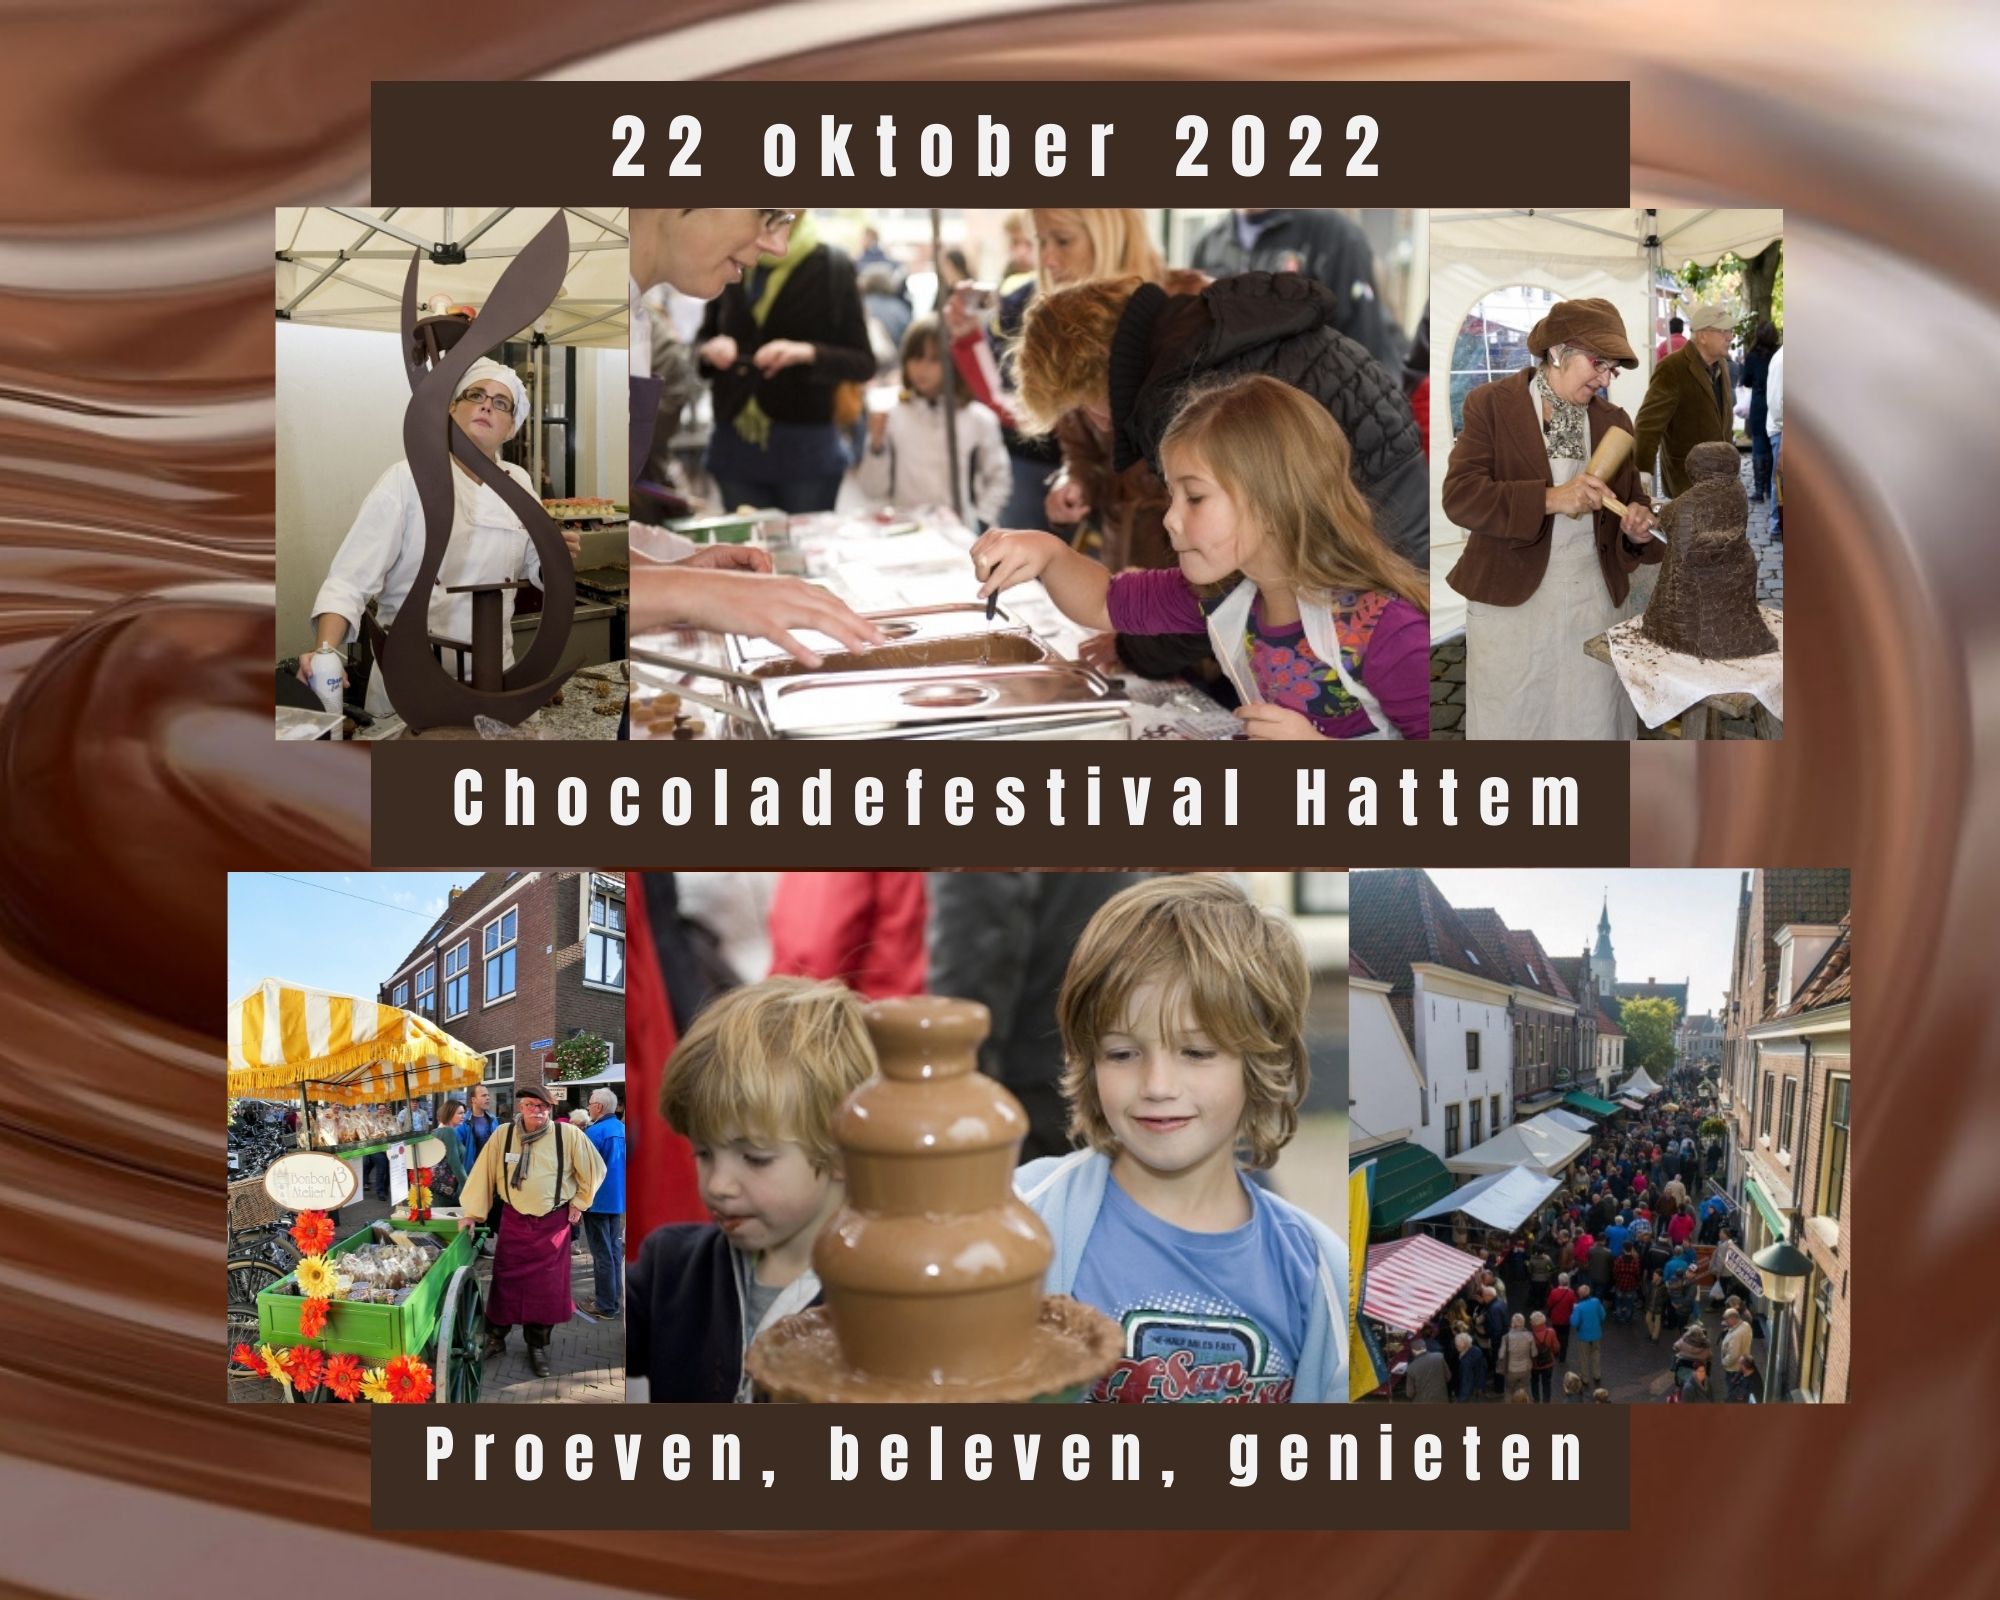 Chocoladefestival Hattem